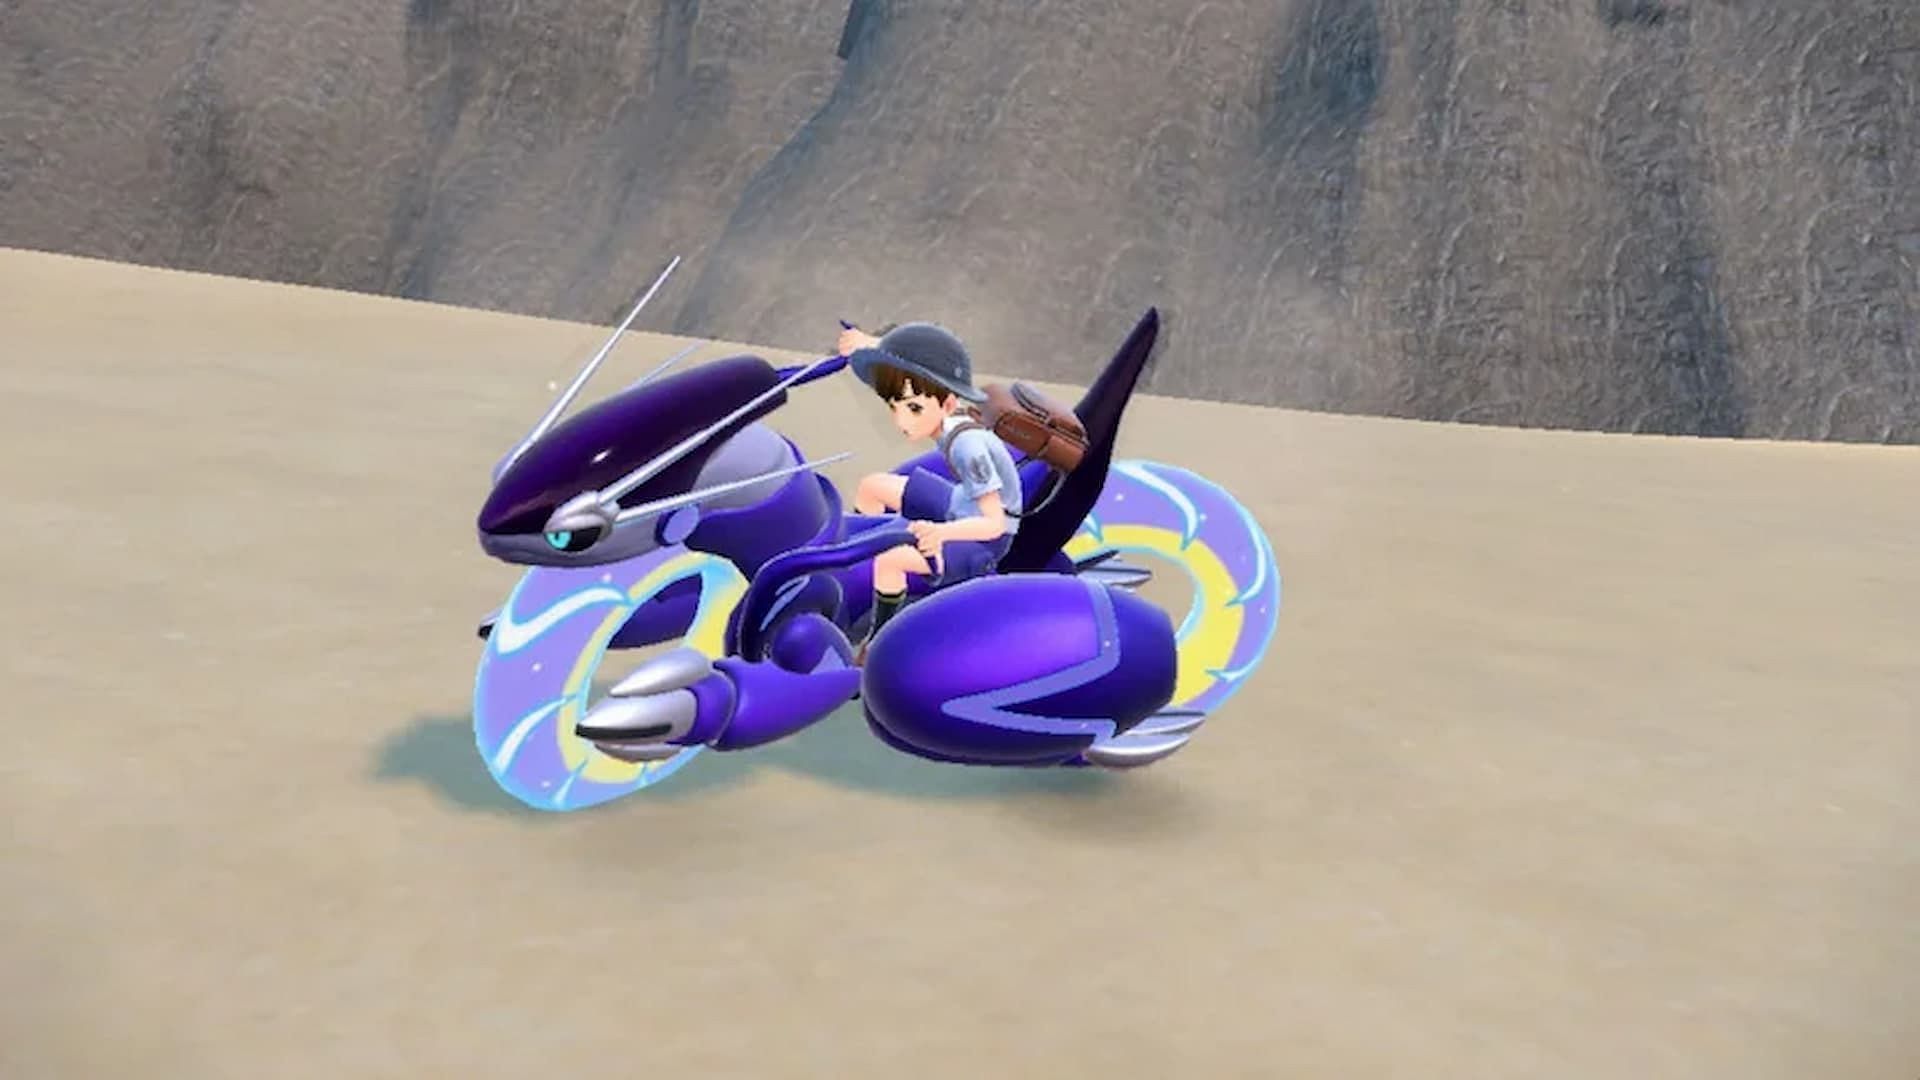 Toyata designs Miraidon motorcycle based on Pokemon Scarlet and Violet